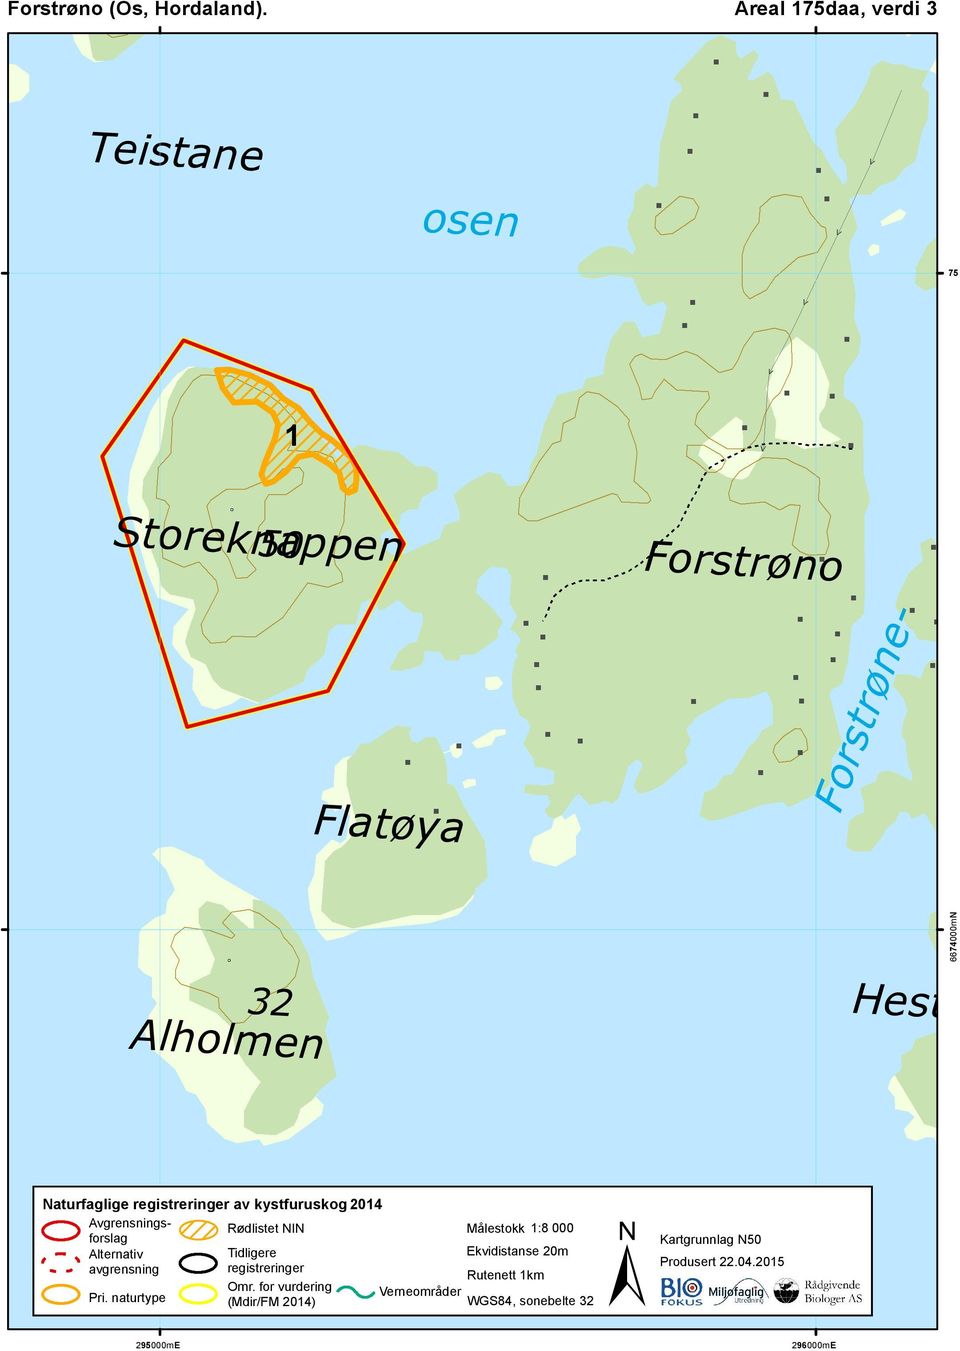 Forstrøne- Naturfaglige registreringer av kystfuruskog 2014 Avgrensningsforslag Rødlistet NIN Alternativ